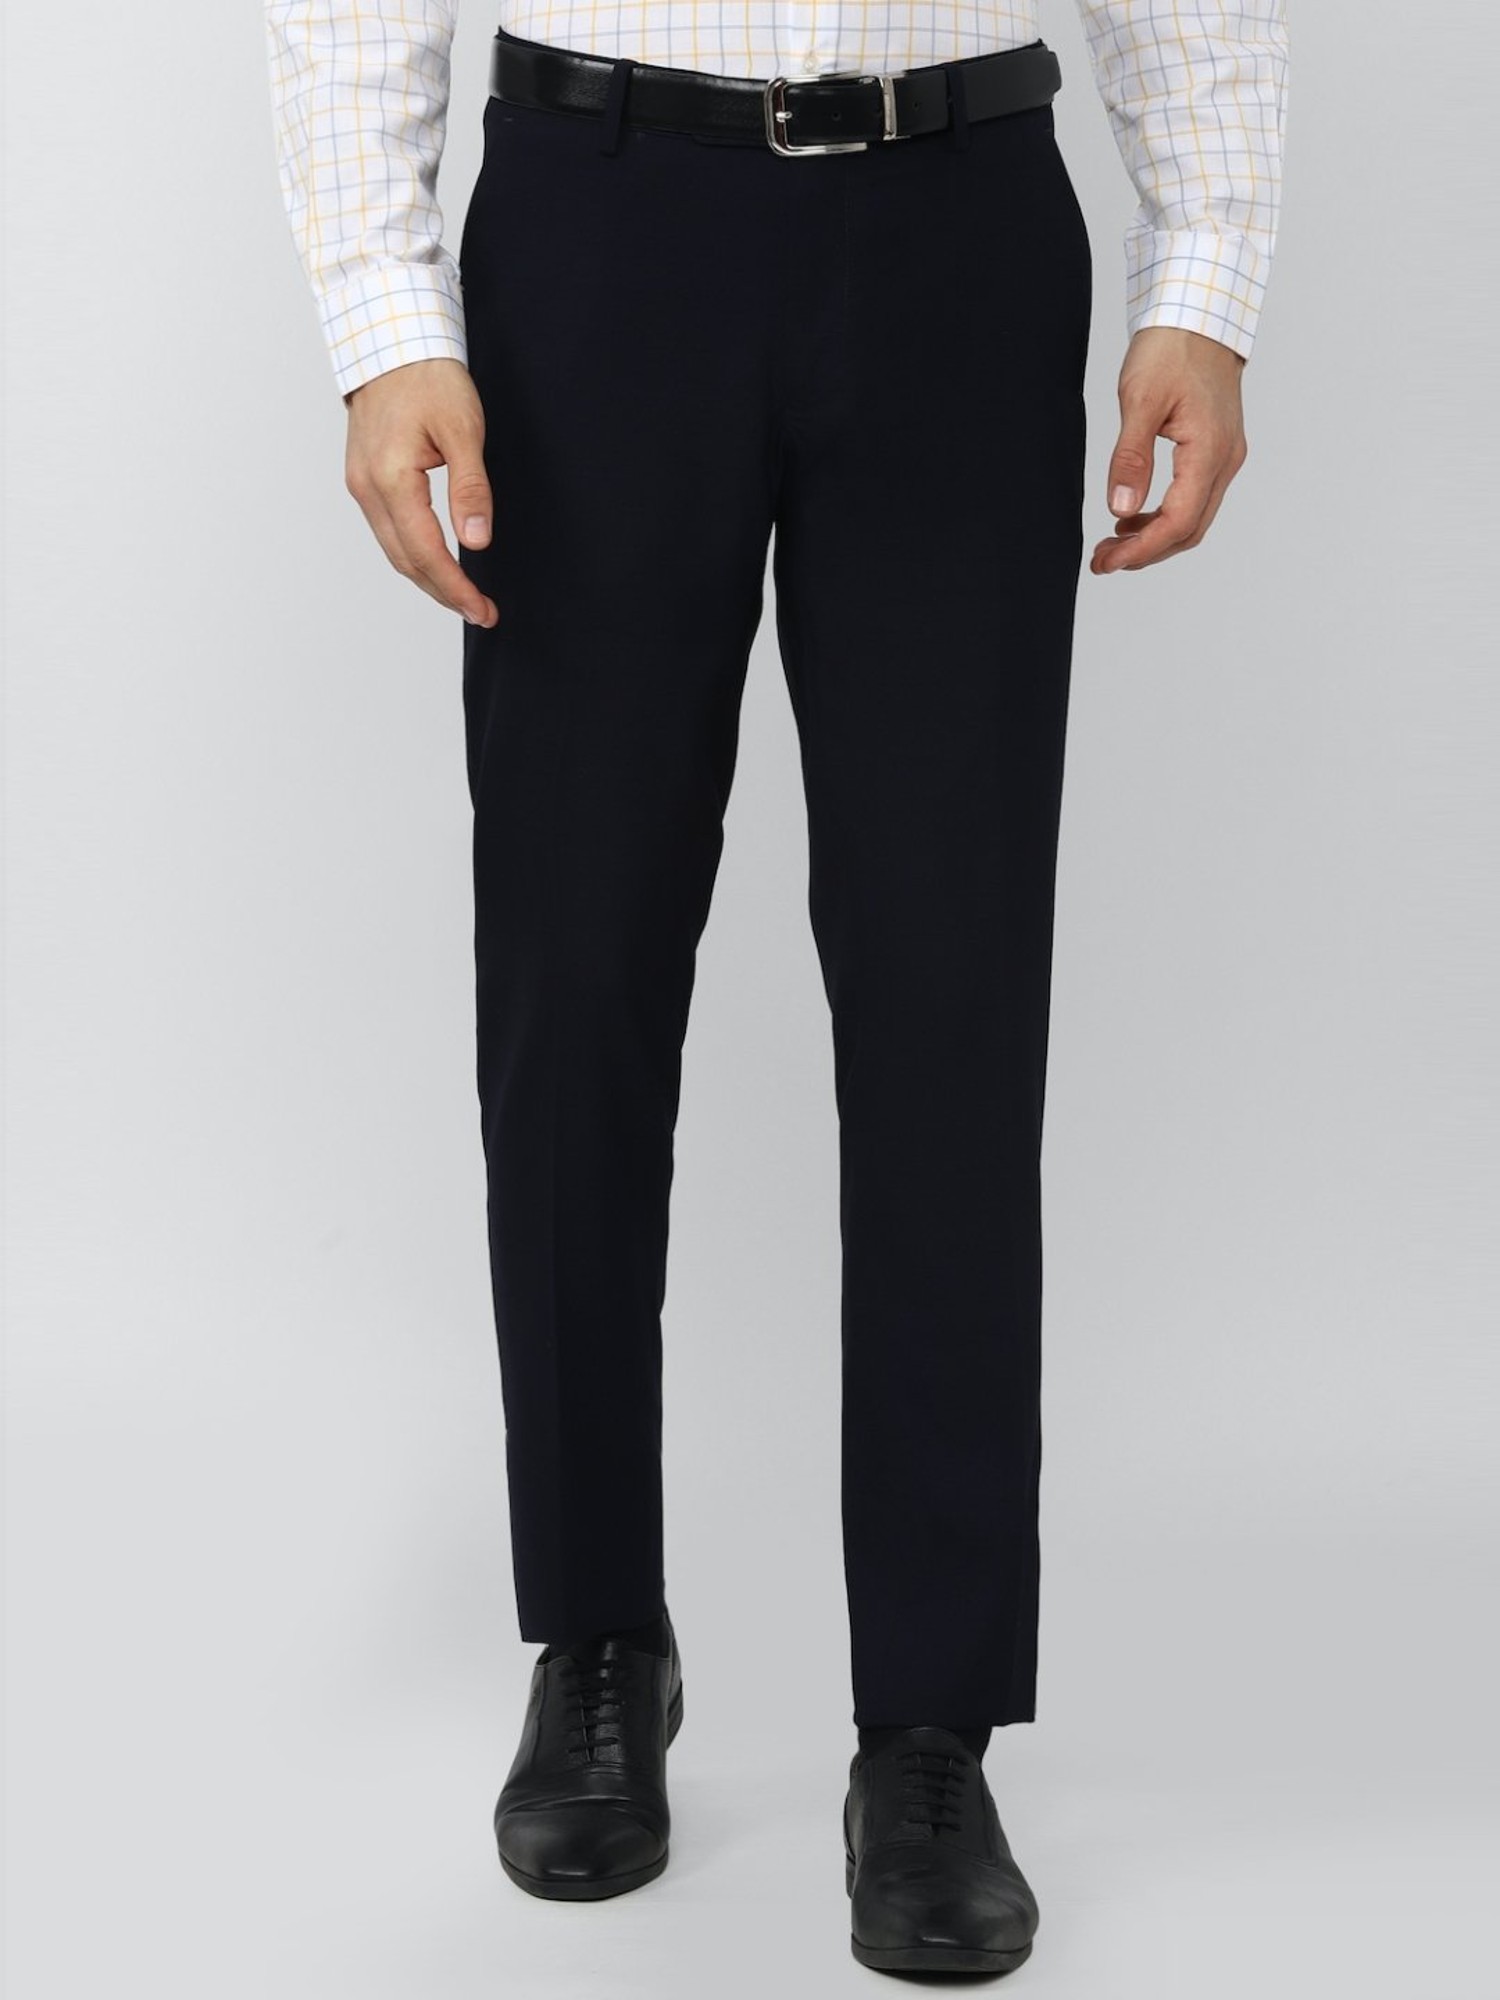 Buy PETER ENGLAND Mens 4 Pocket Slub Formal Trousers  Shoppers Stop